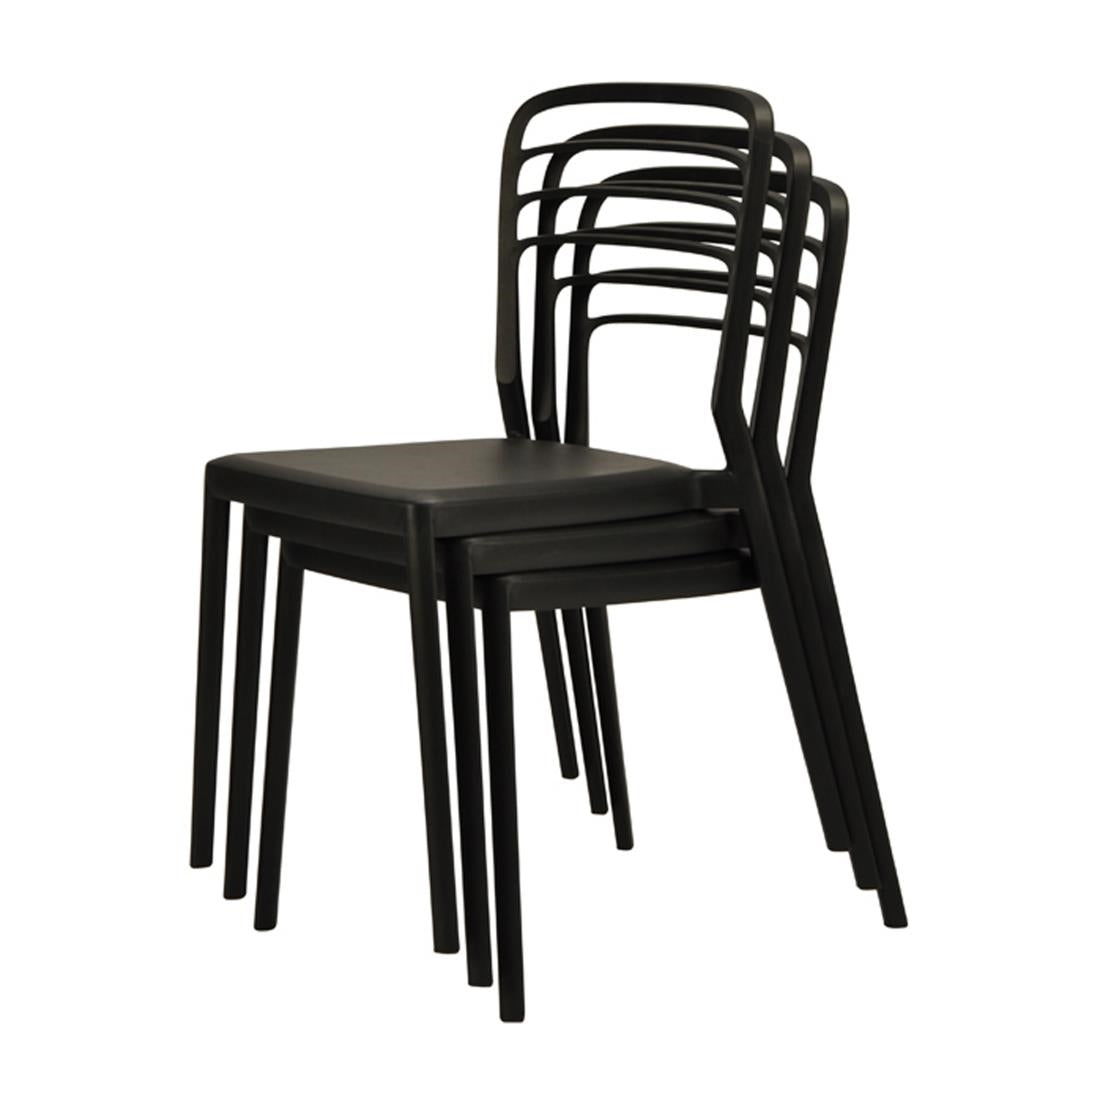 DM088 Newquay Ocean Plastic Outdoor Chair in Black (Pack of 4)